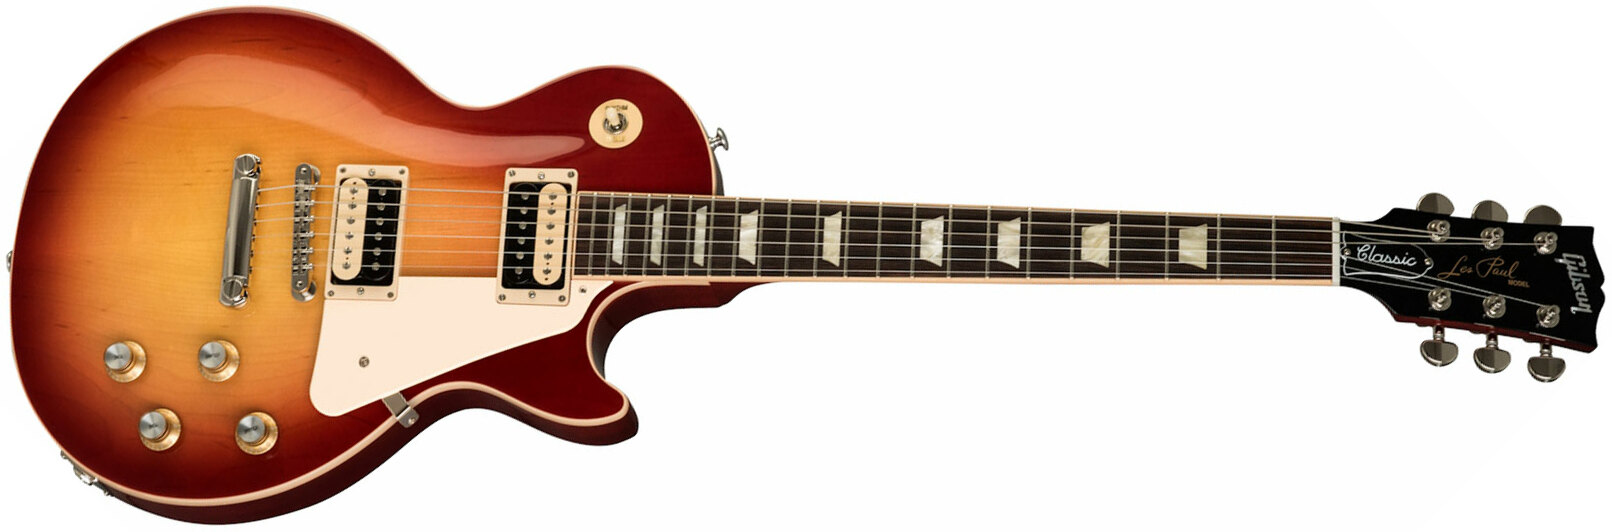 Gibson Les Paul Classic Modern 2019 2h Ht Rw - Heritage Cherry Sunburst - Single cut electric guitar - Main picture